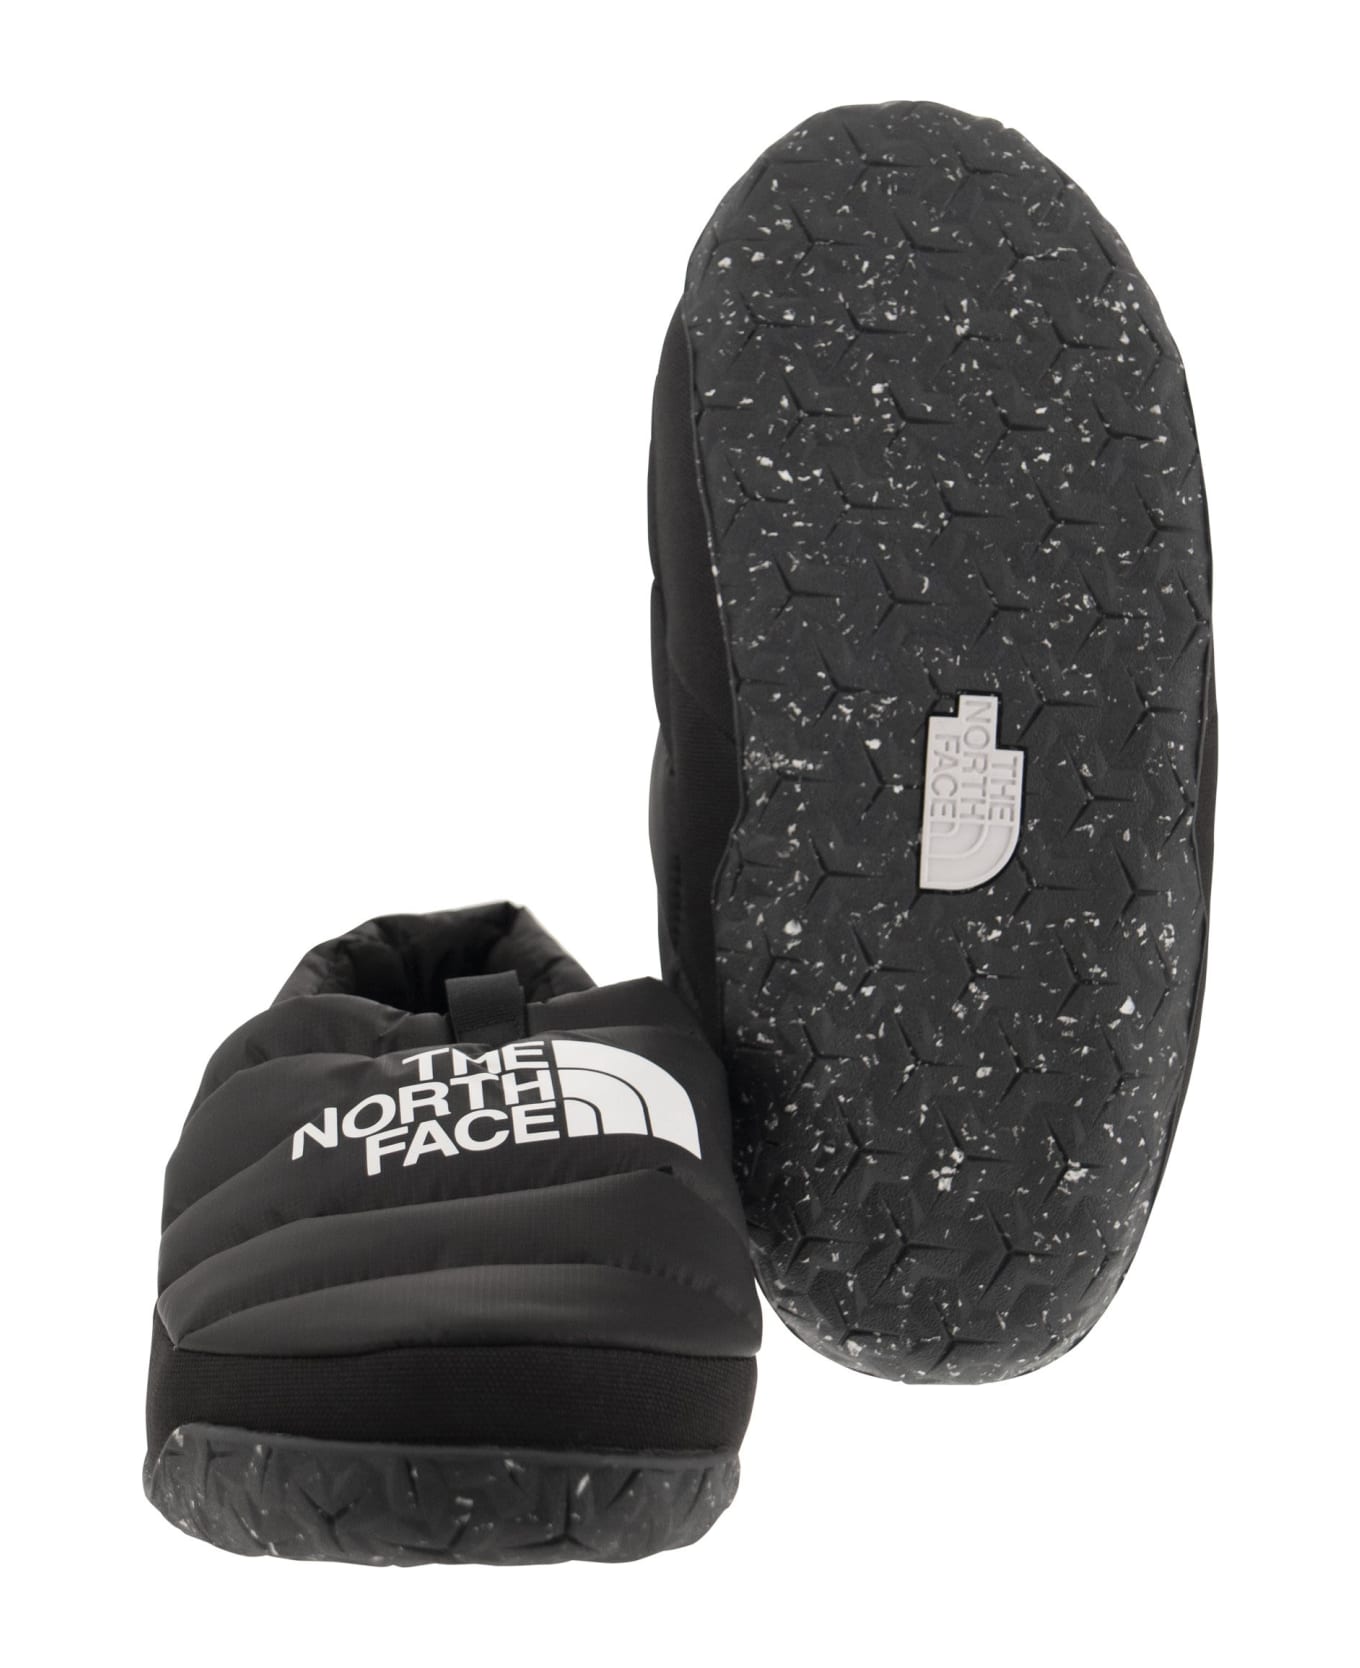 The North Face Nuptse - Winter Slippers - Black/white